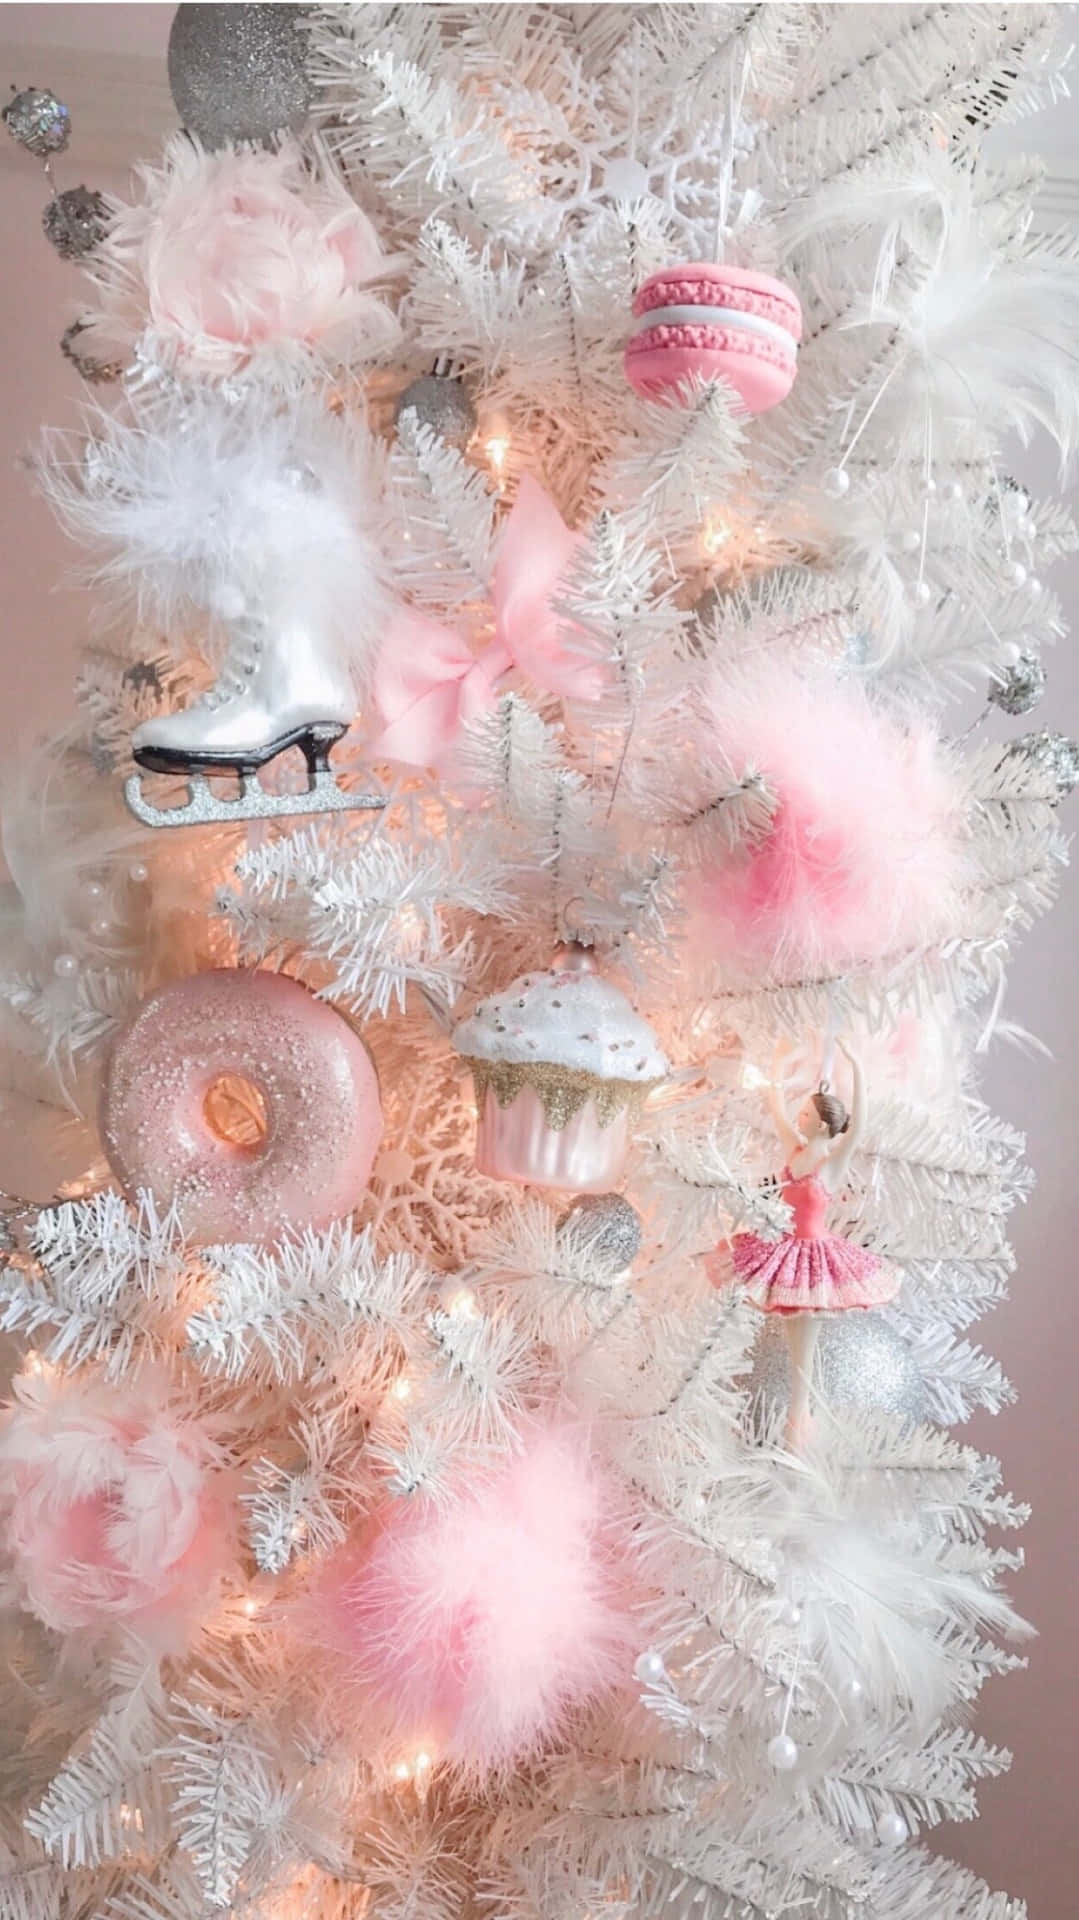 Pastel Aesthetic Christmas Tree Close Up Shot Wallpaper